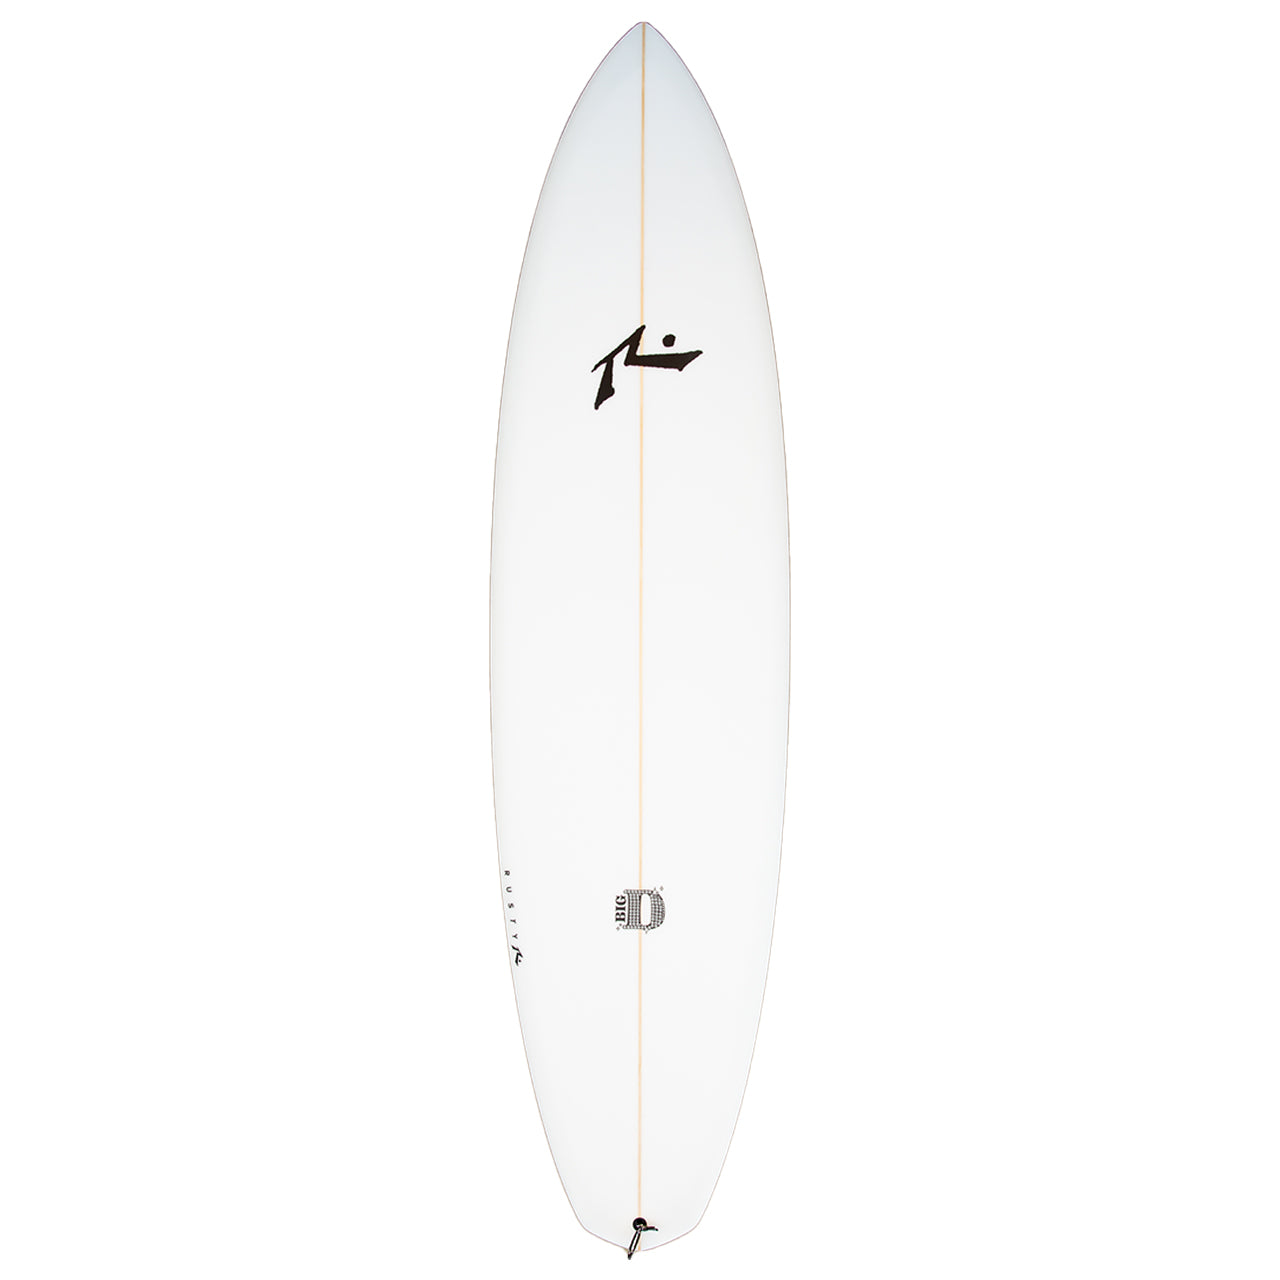 Big D Midlength Surfboard Deck View - Rusty Surfboards 